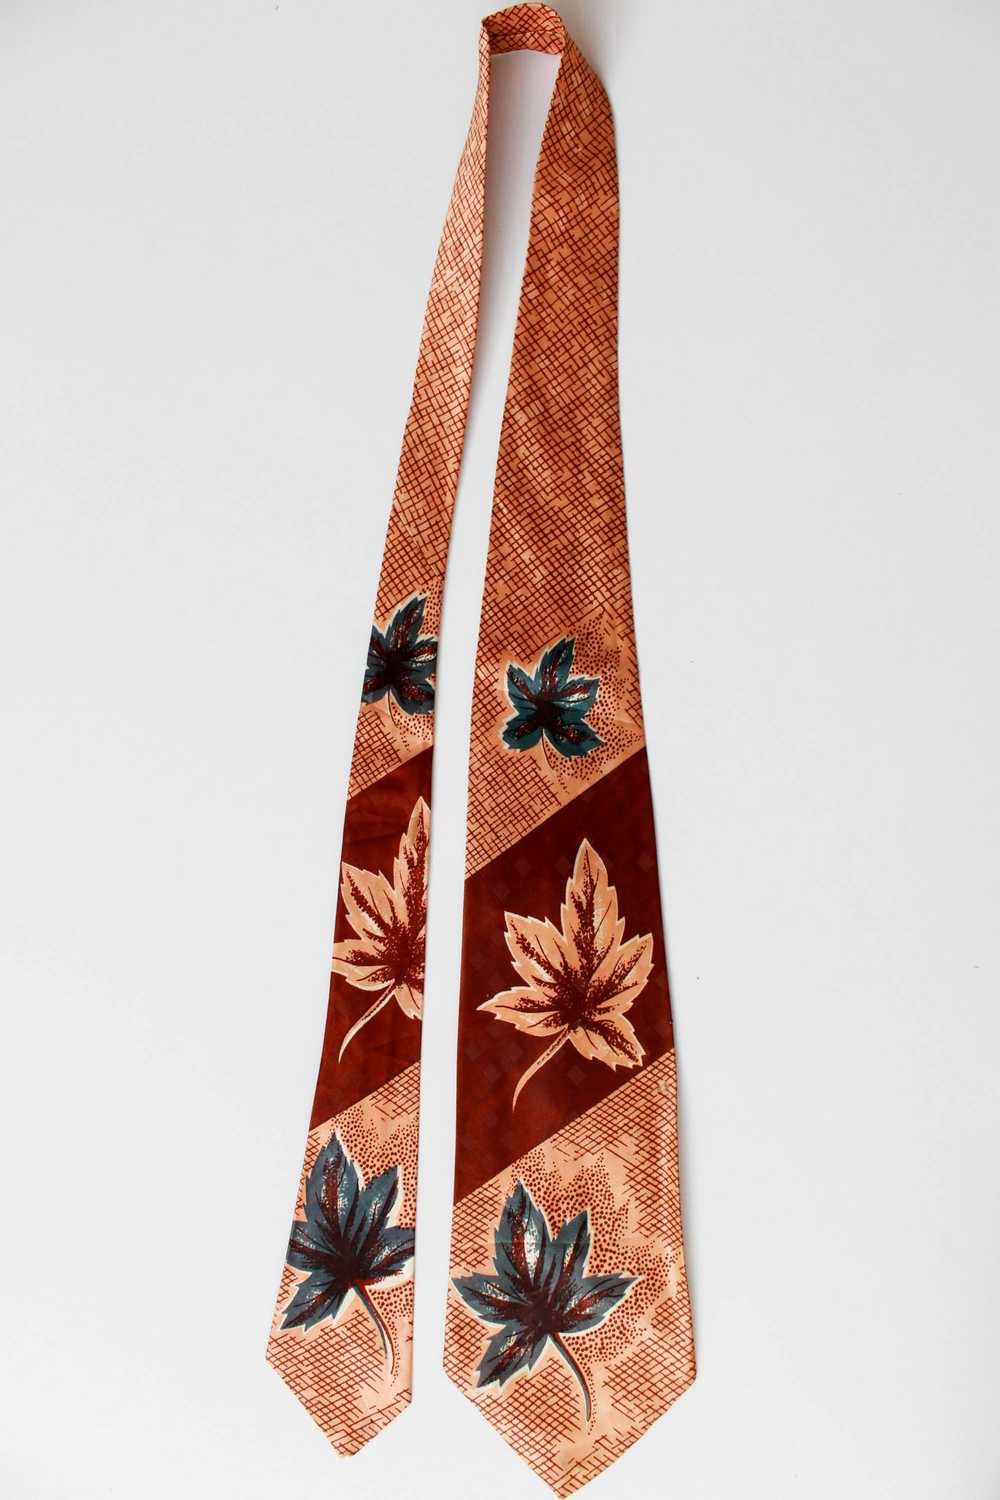 1940s Three Leaf Print Rayon Necktie - image 1